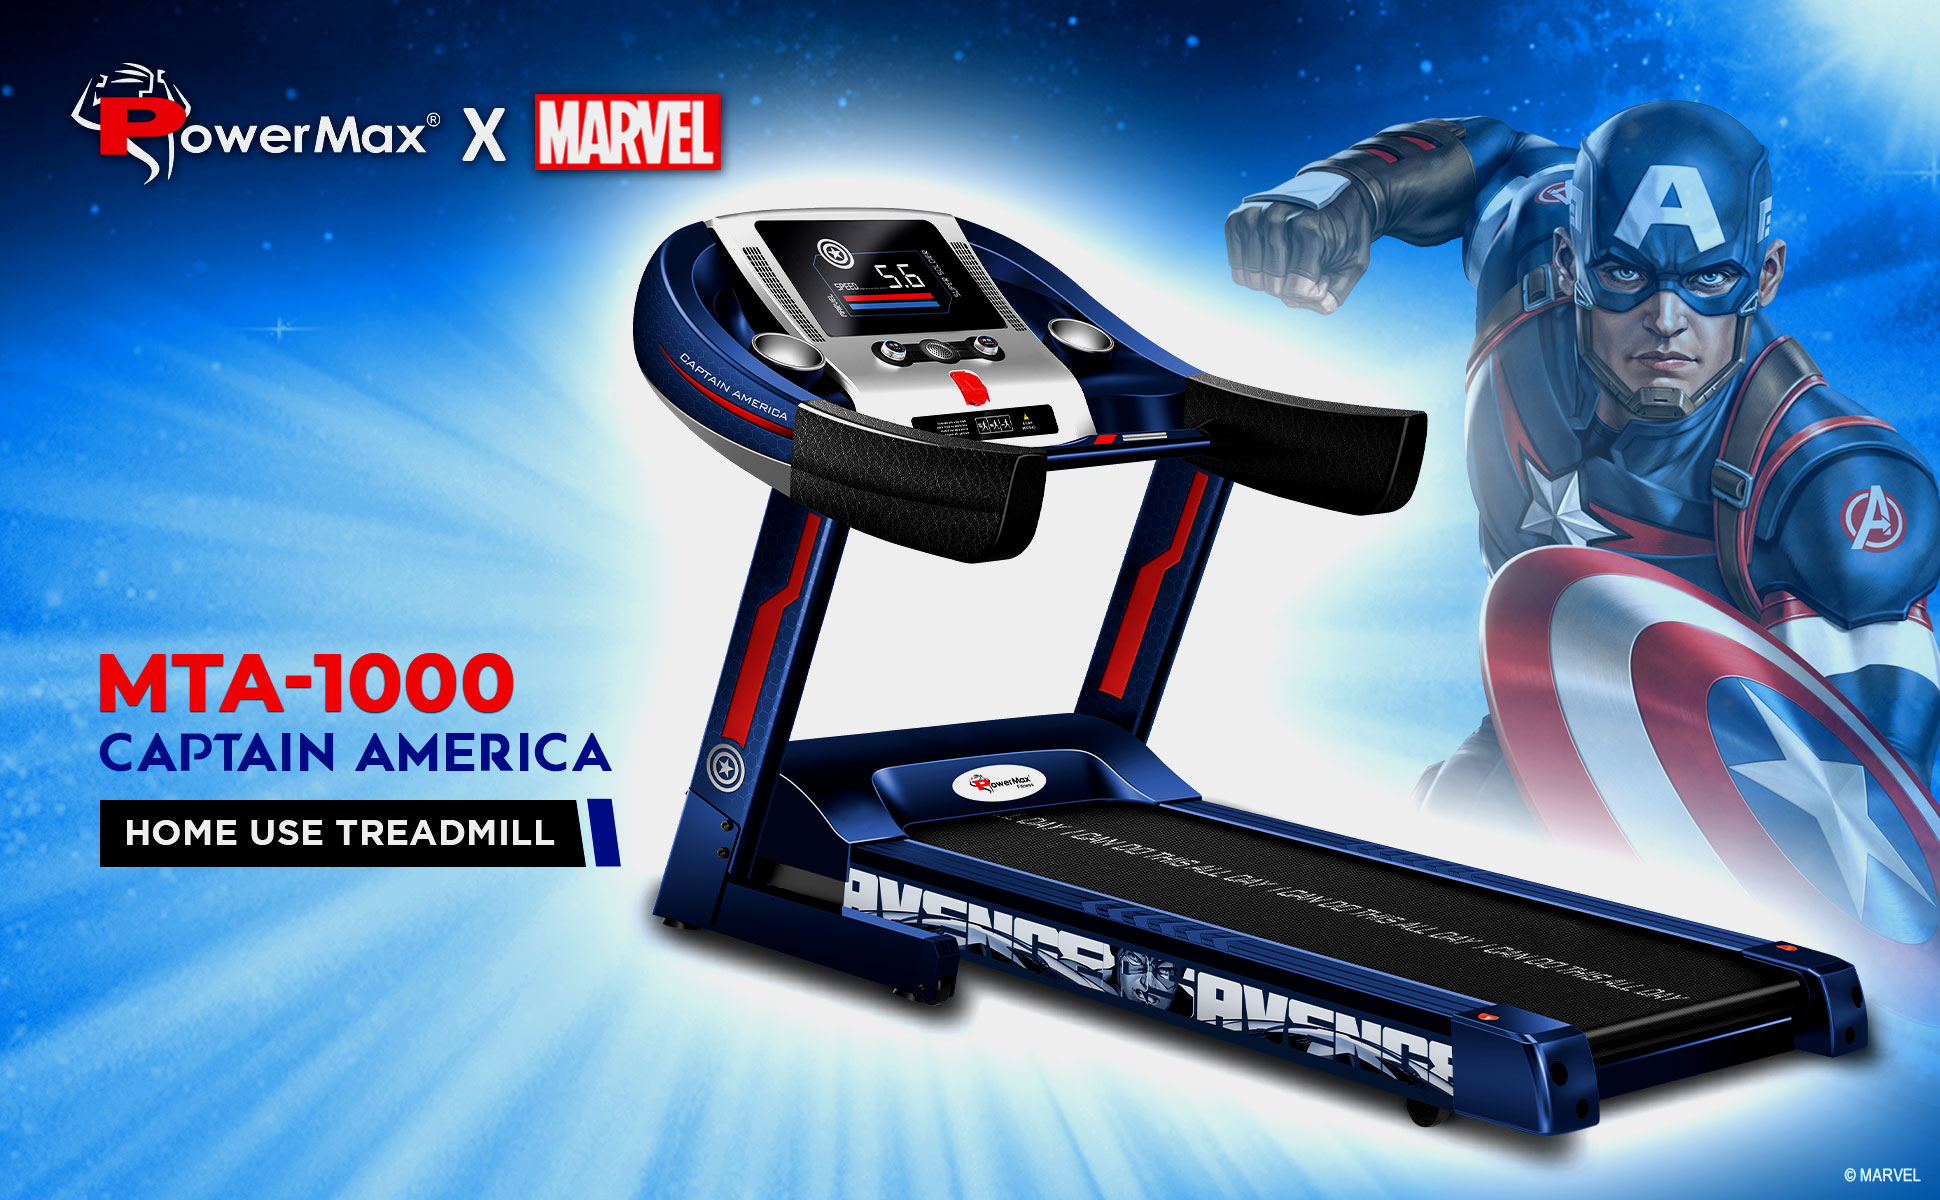 buy powermax x marvel mta-1000 semi auto lubrication motorized treadmill with auto incline